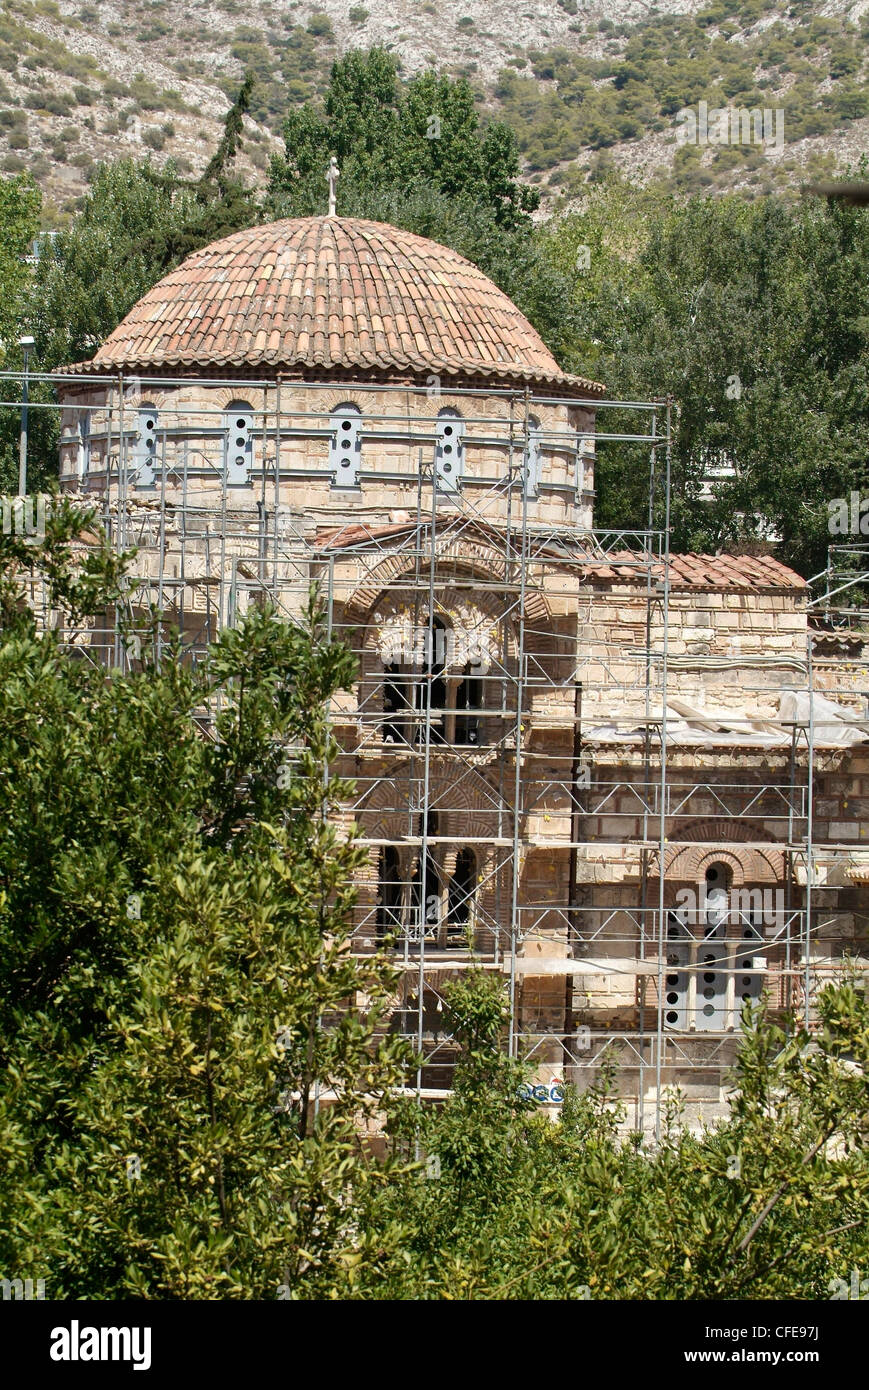 Athens The Monastery Church of Daphni - currently undergoing major refurbishment Stock Photo